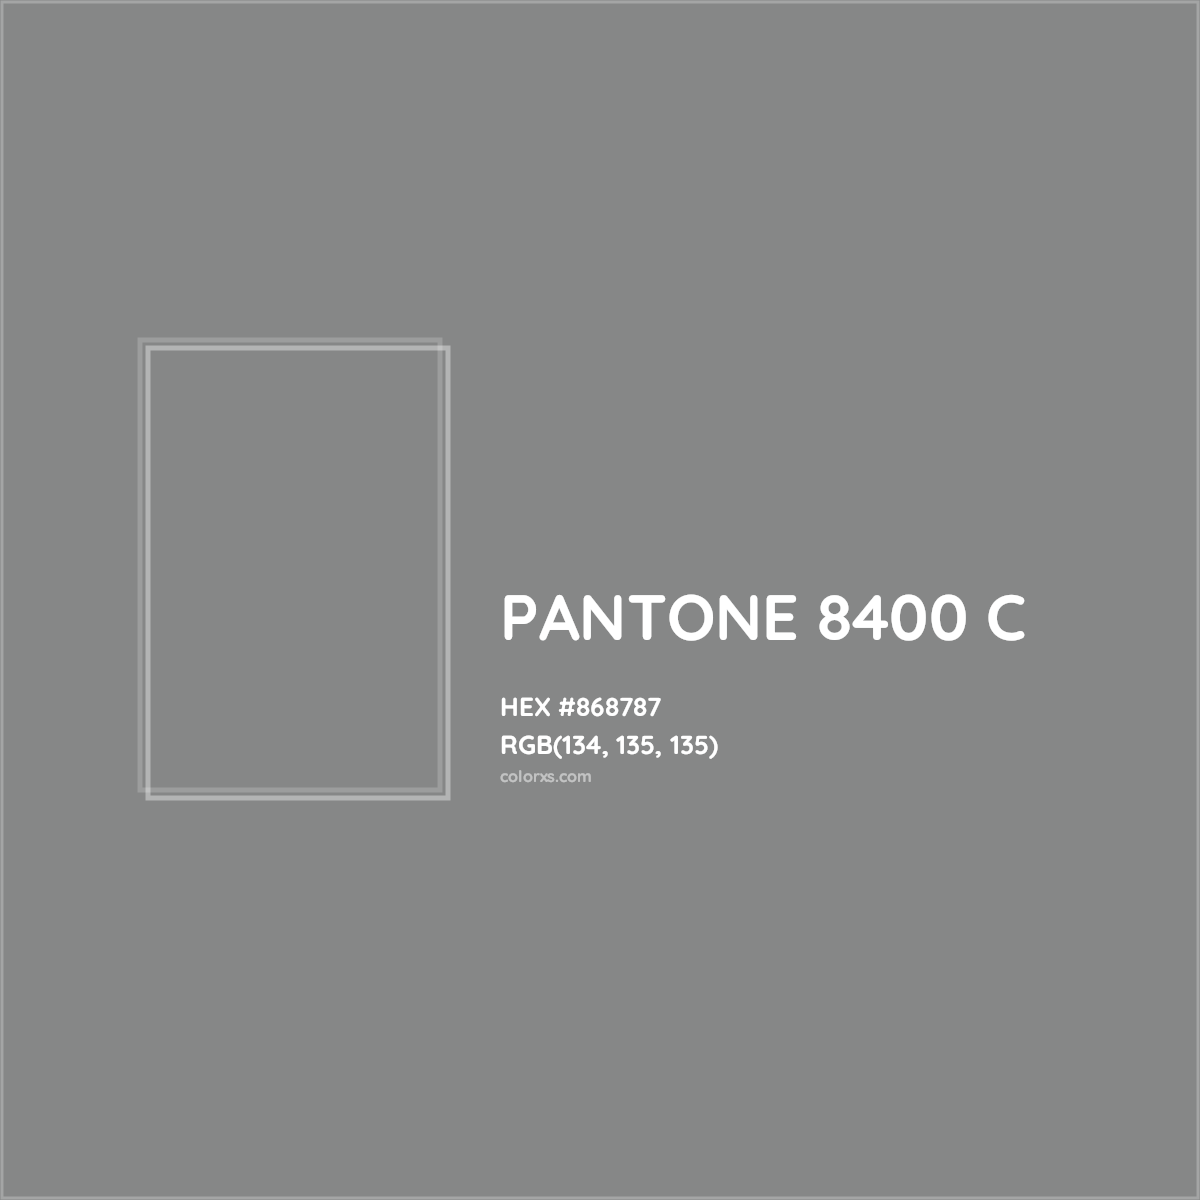 HEX #868787 PANTONE 8400 C CMS Pantone PMS - Color Code